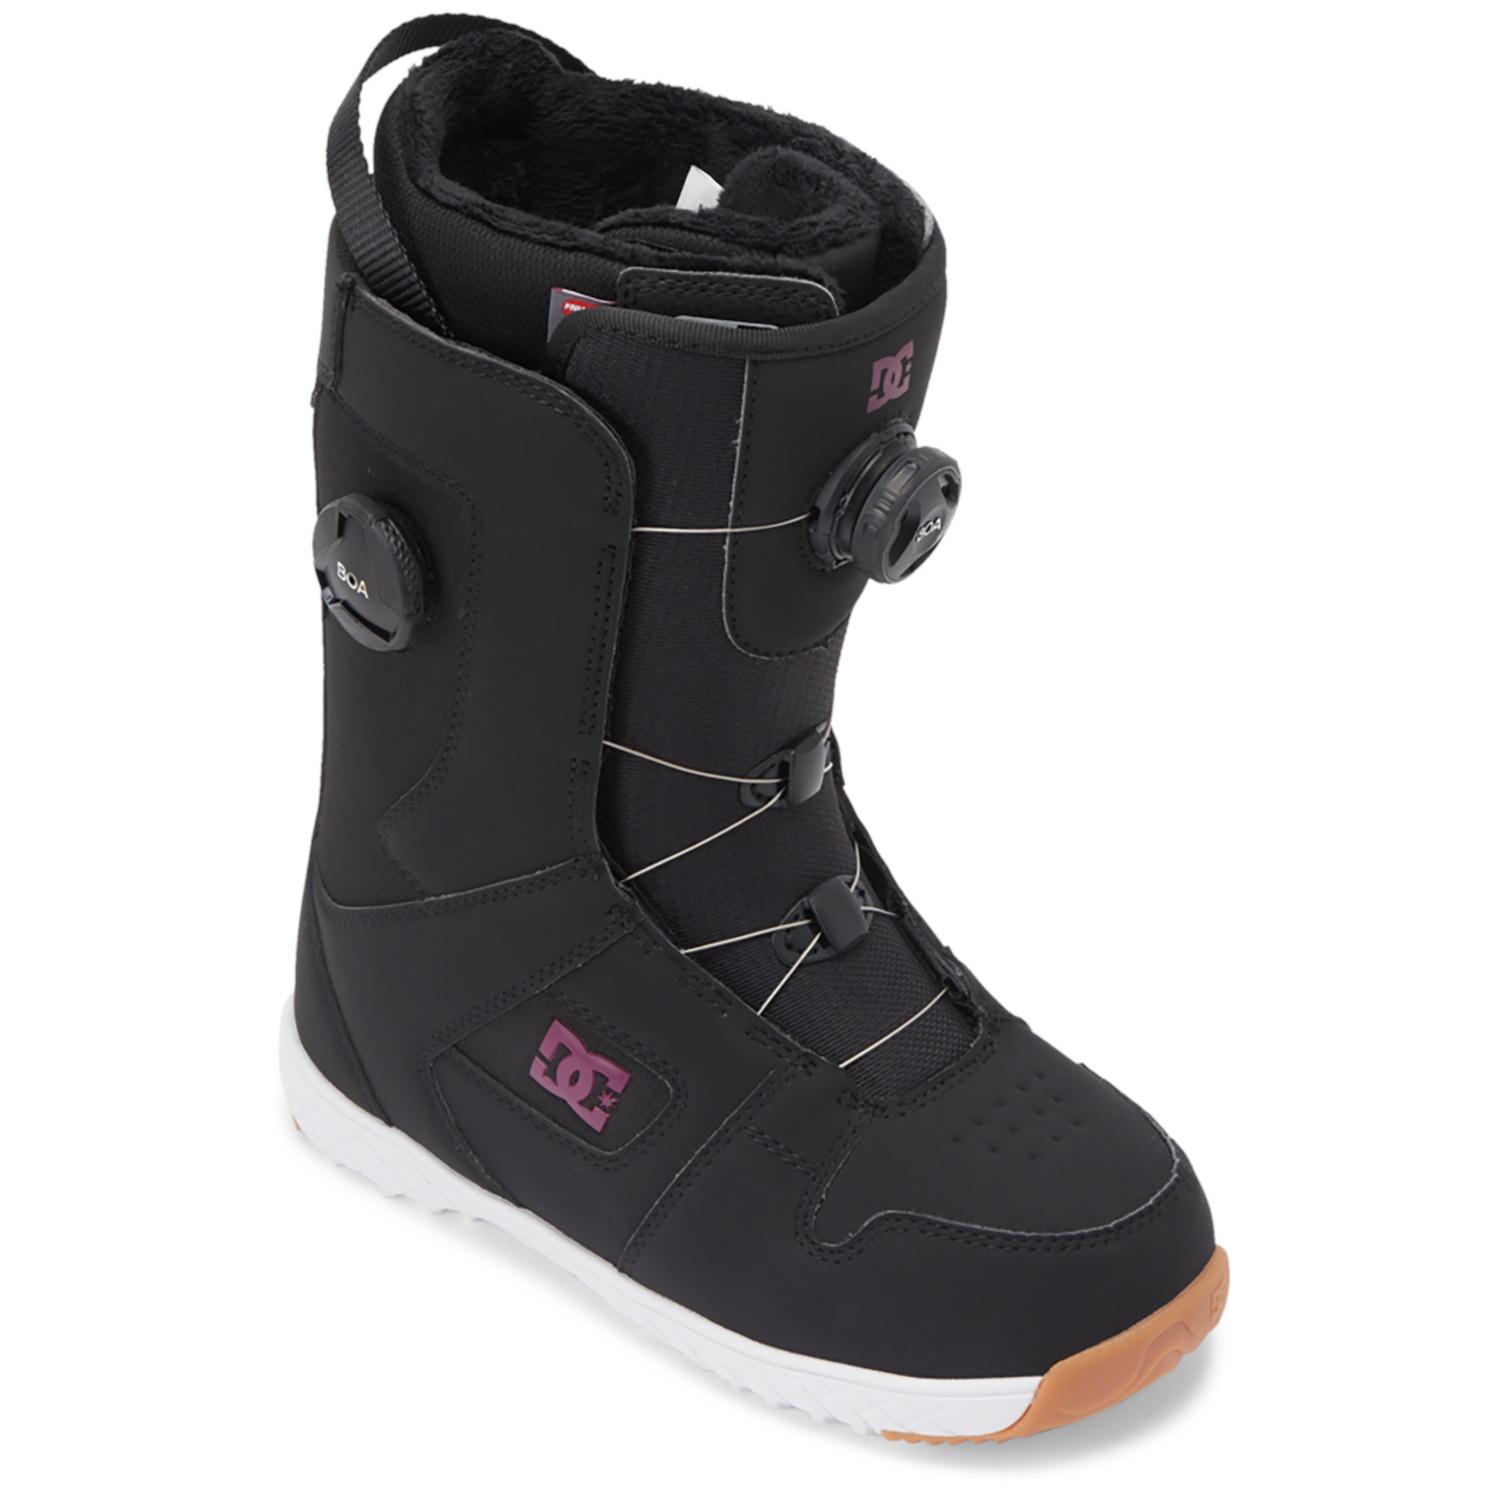 DC Phase Boa Pro Snowboard Boots - Women's